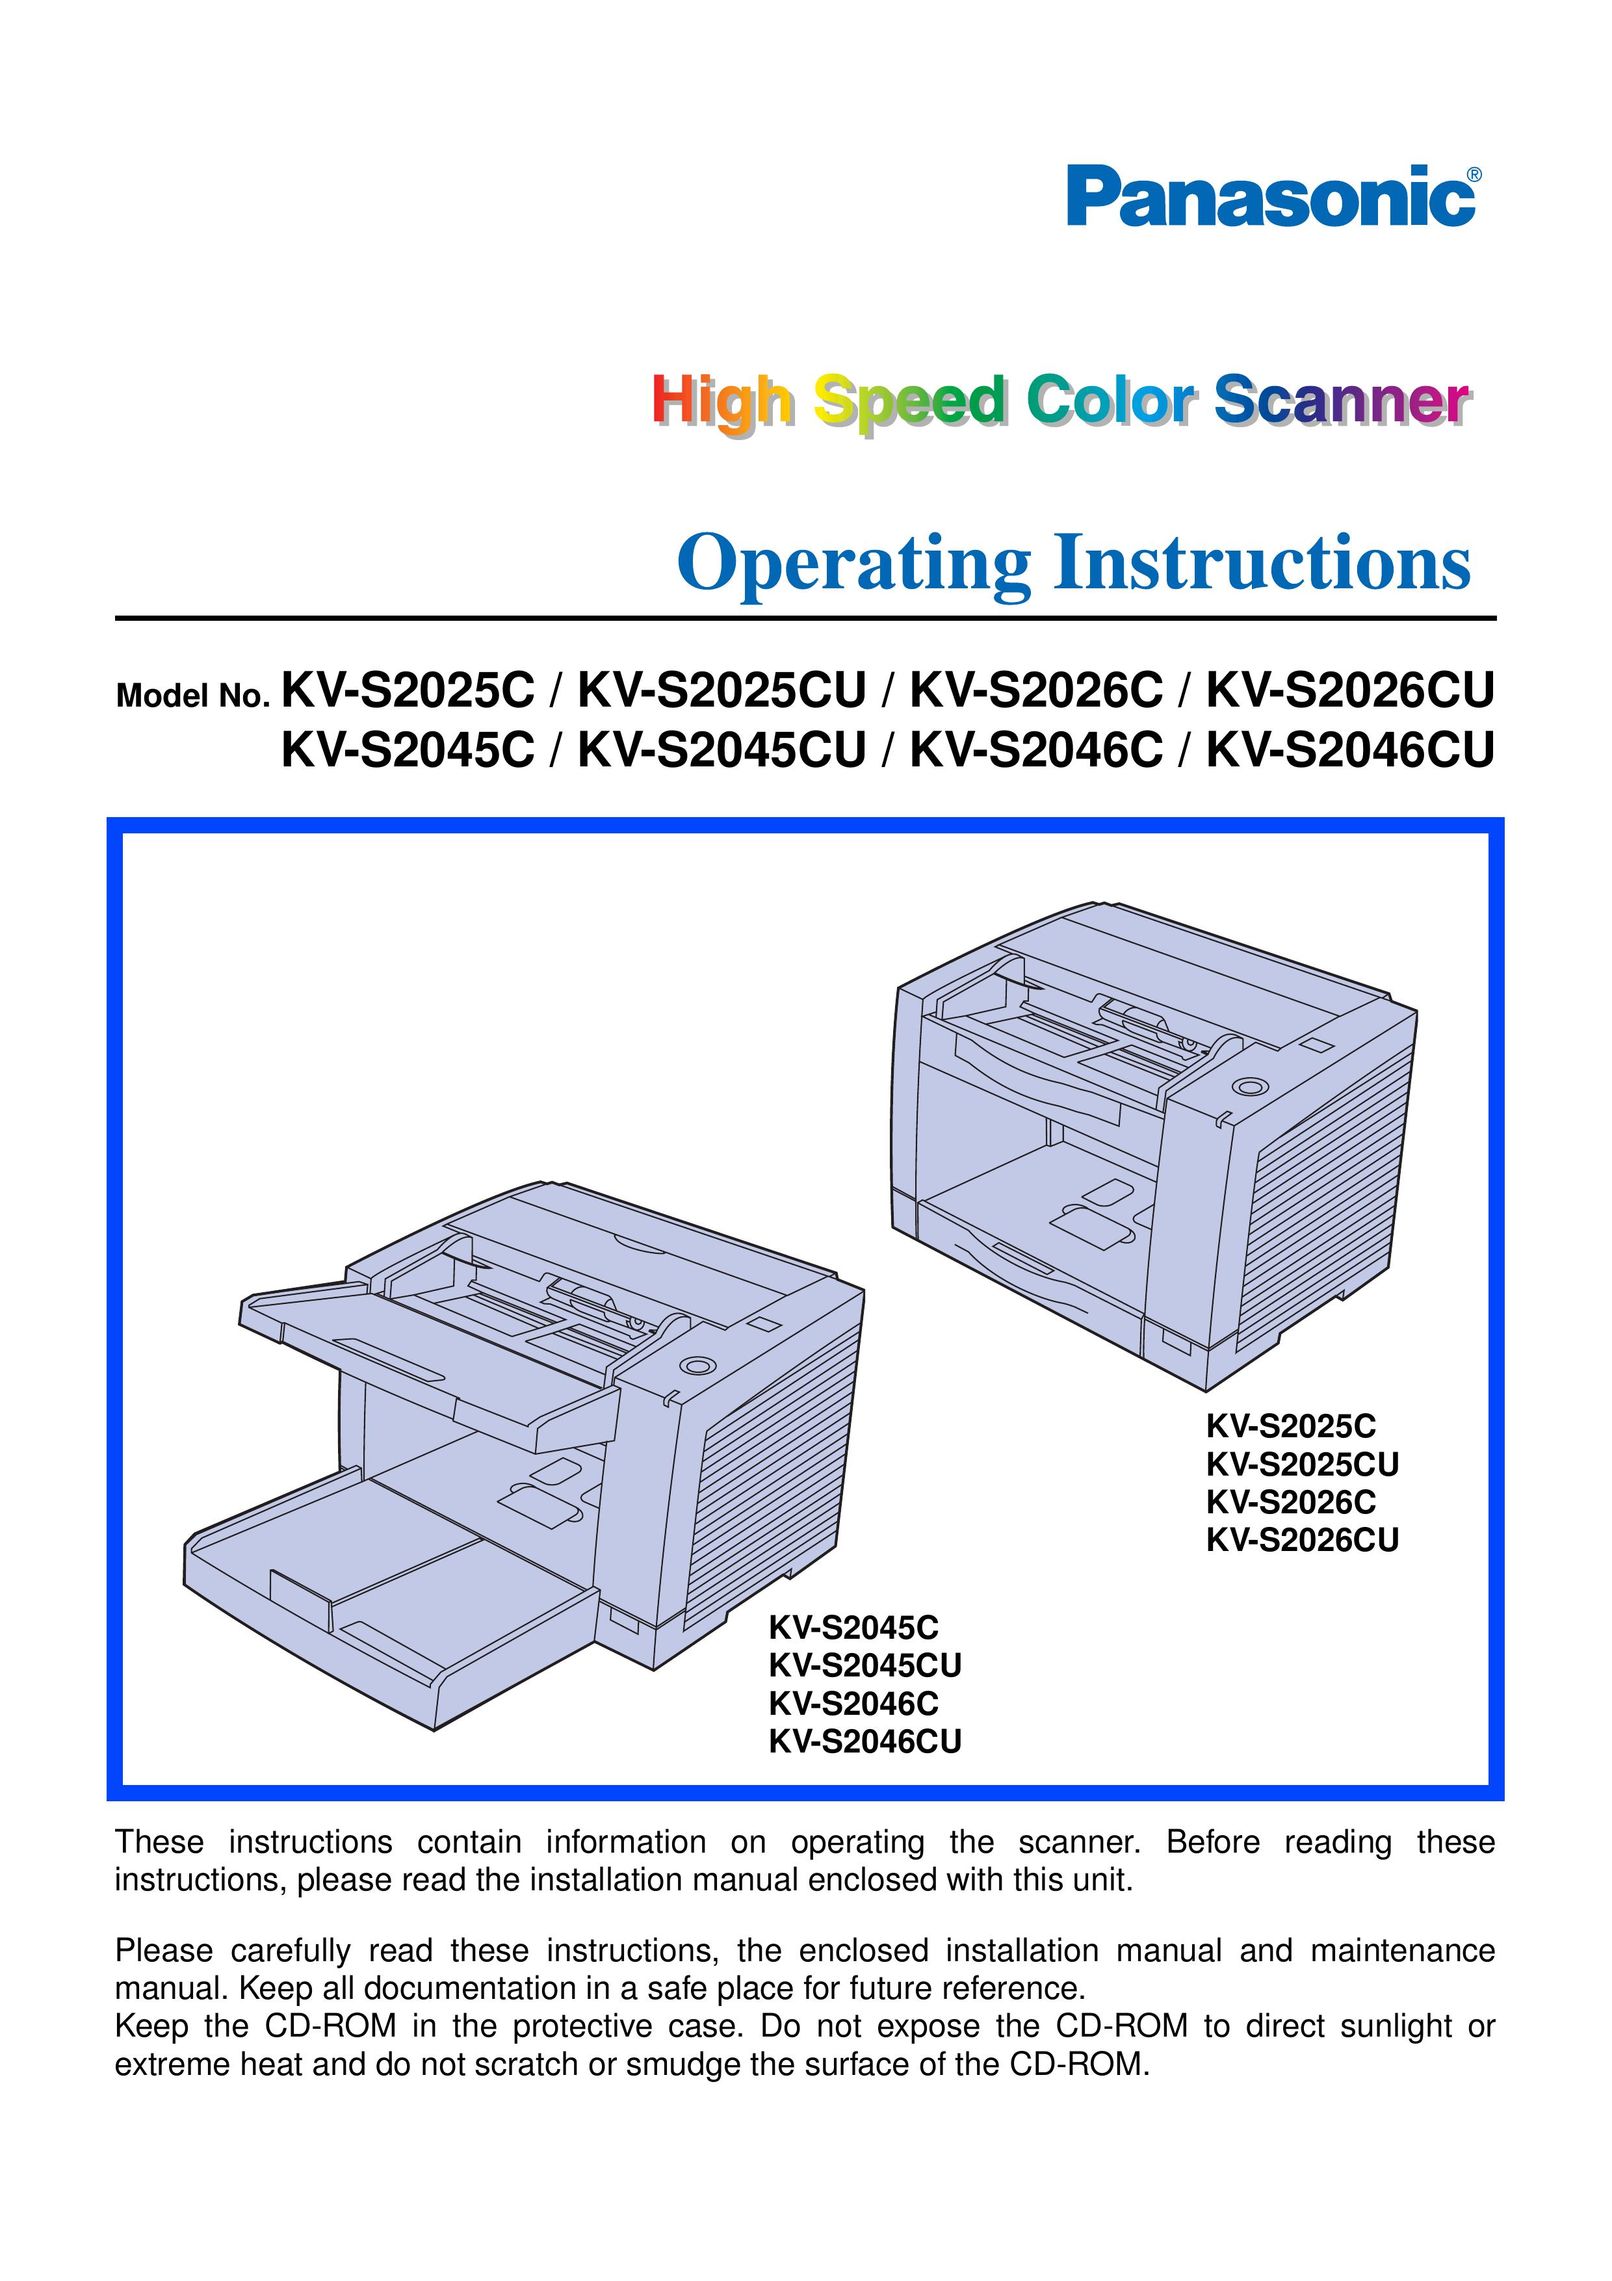 Panasonic KV-S2046C Scanner User Manual